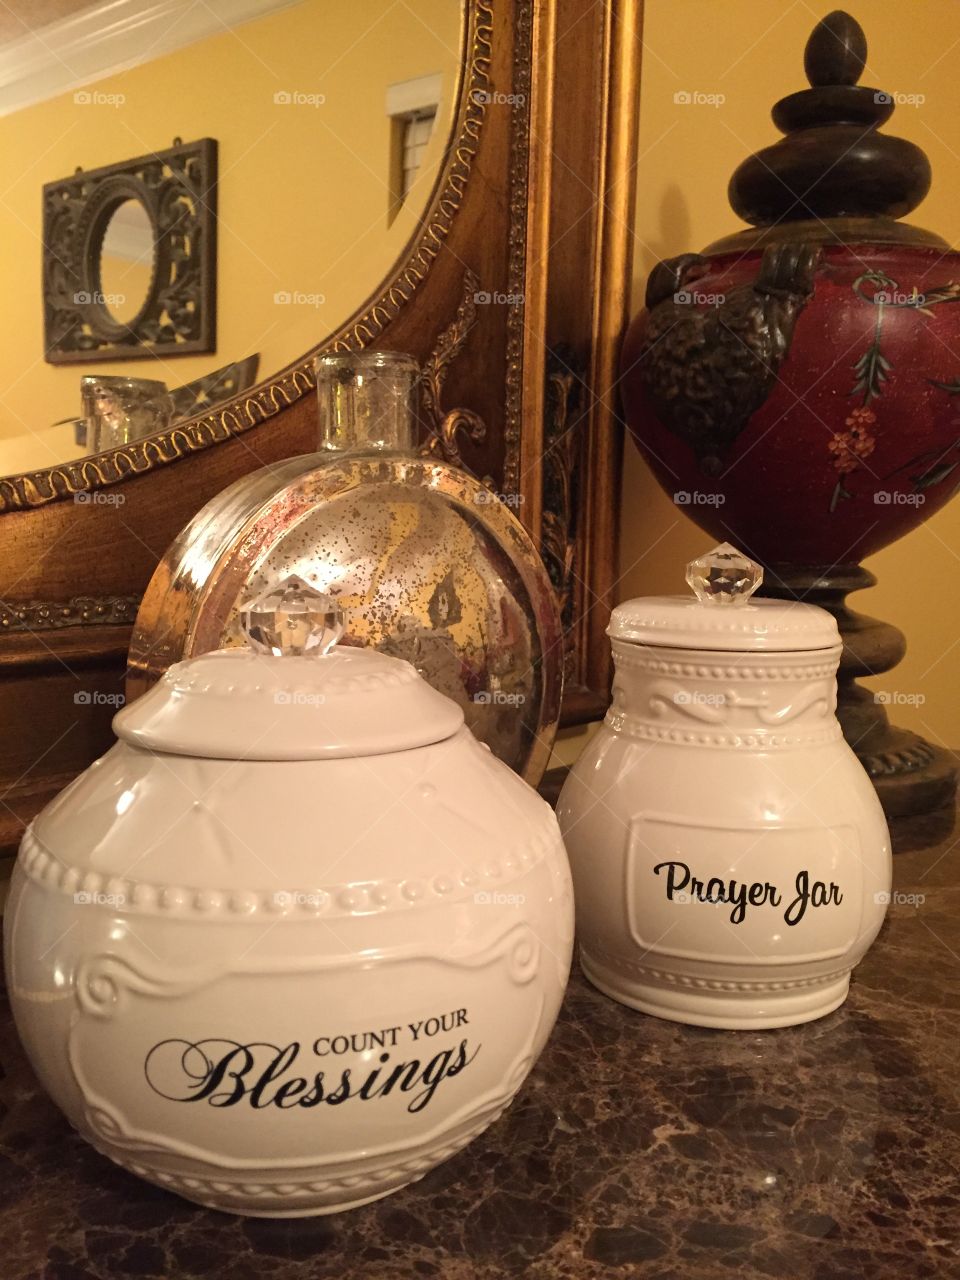 Blessing and Prayer Jars